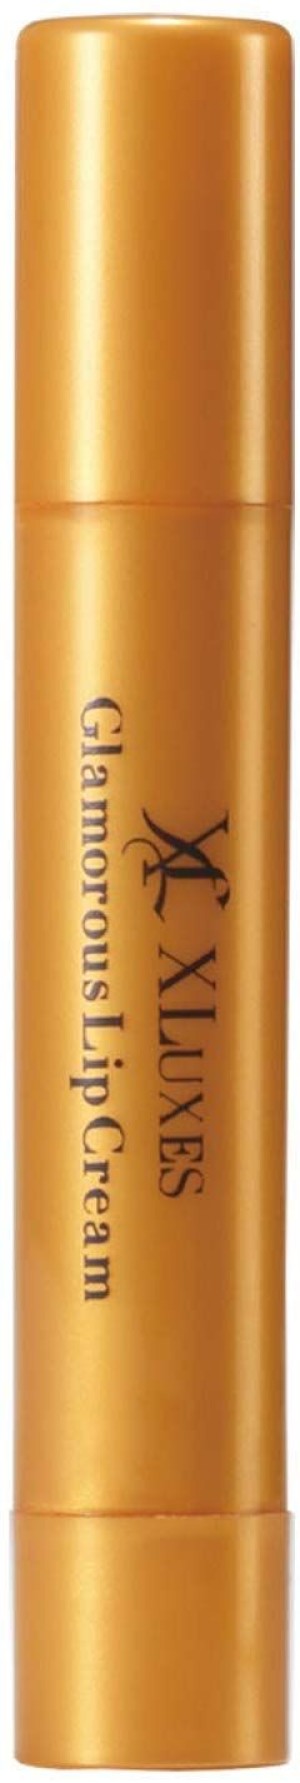 Anti-aging X-one XLuxes Glamorous Lip Cream